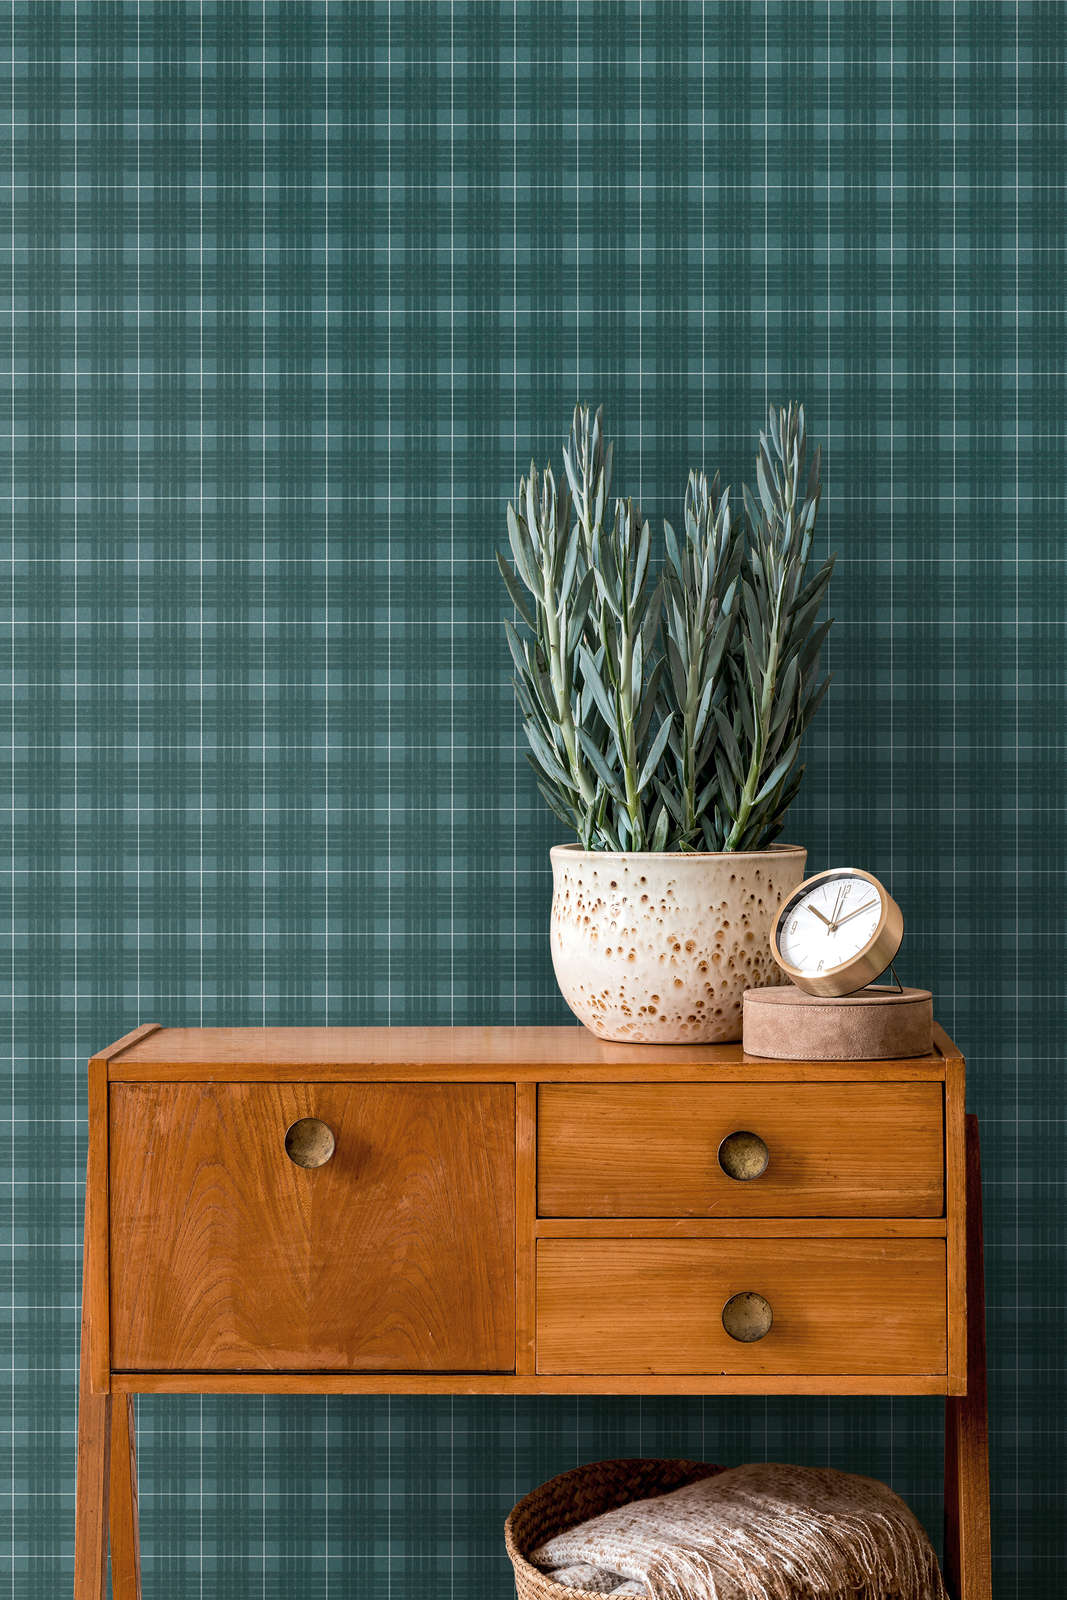             Checkered Textile Optics Non-woven Wallpaper with Flannel Pattern - Green, White
        